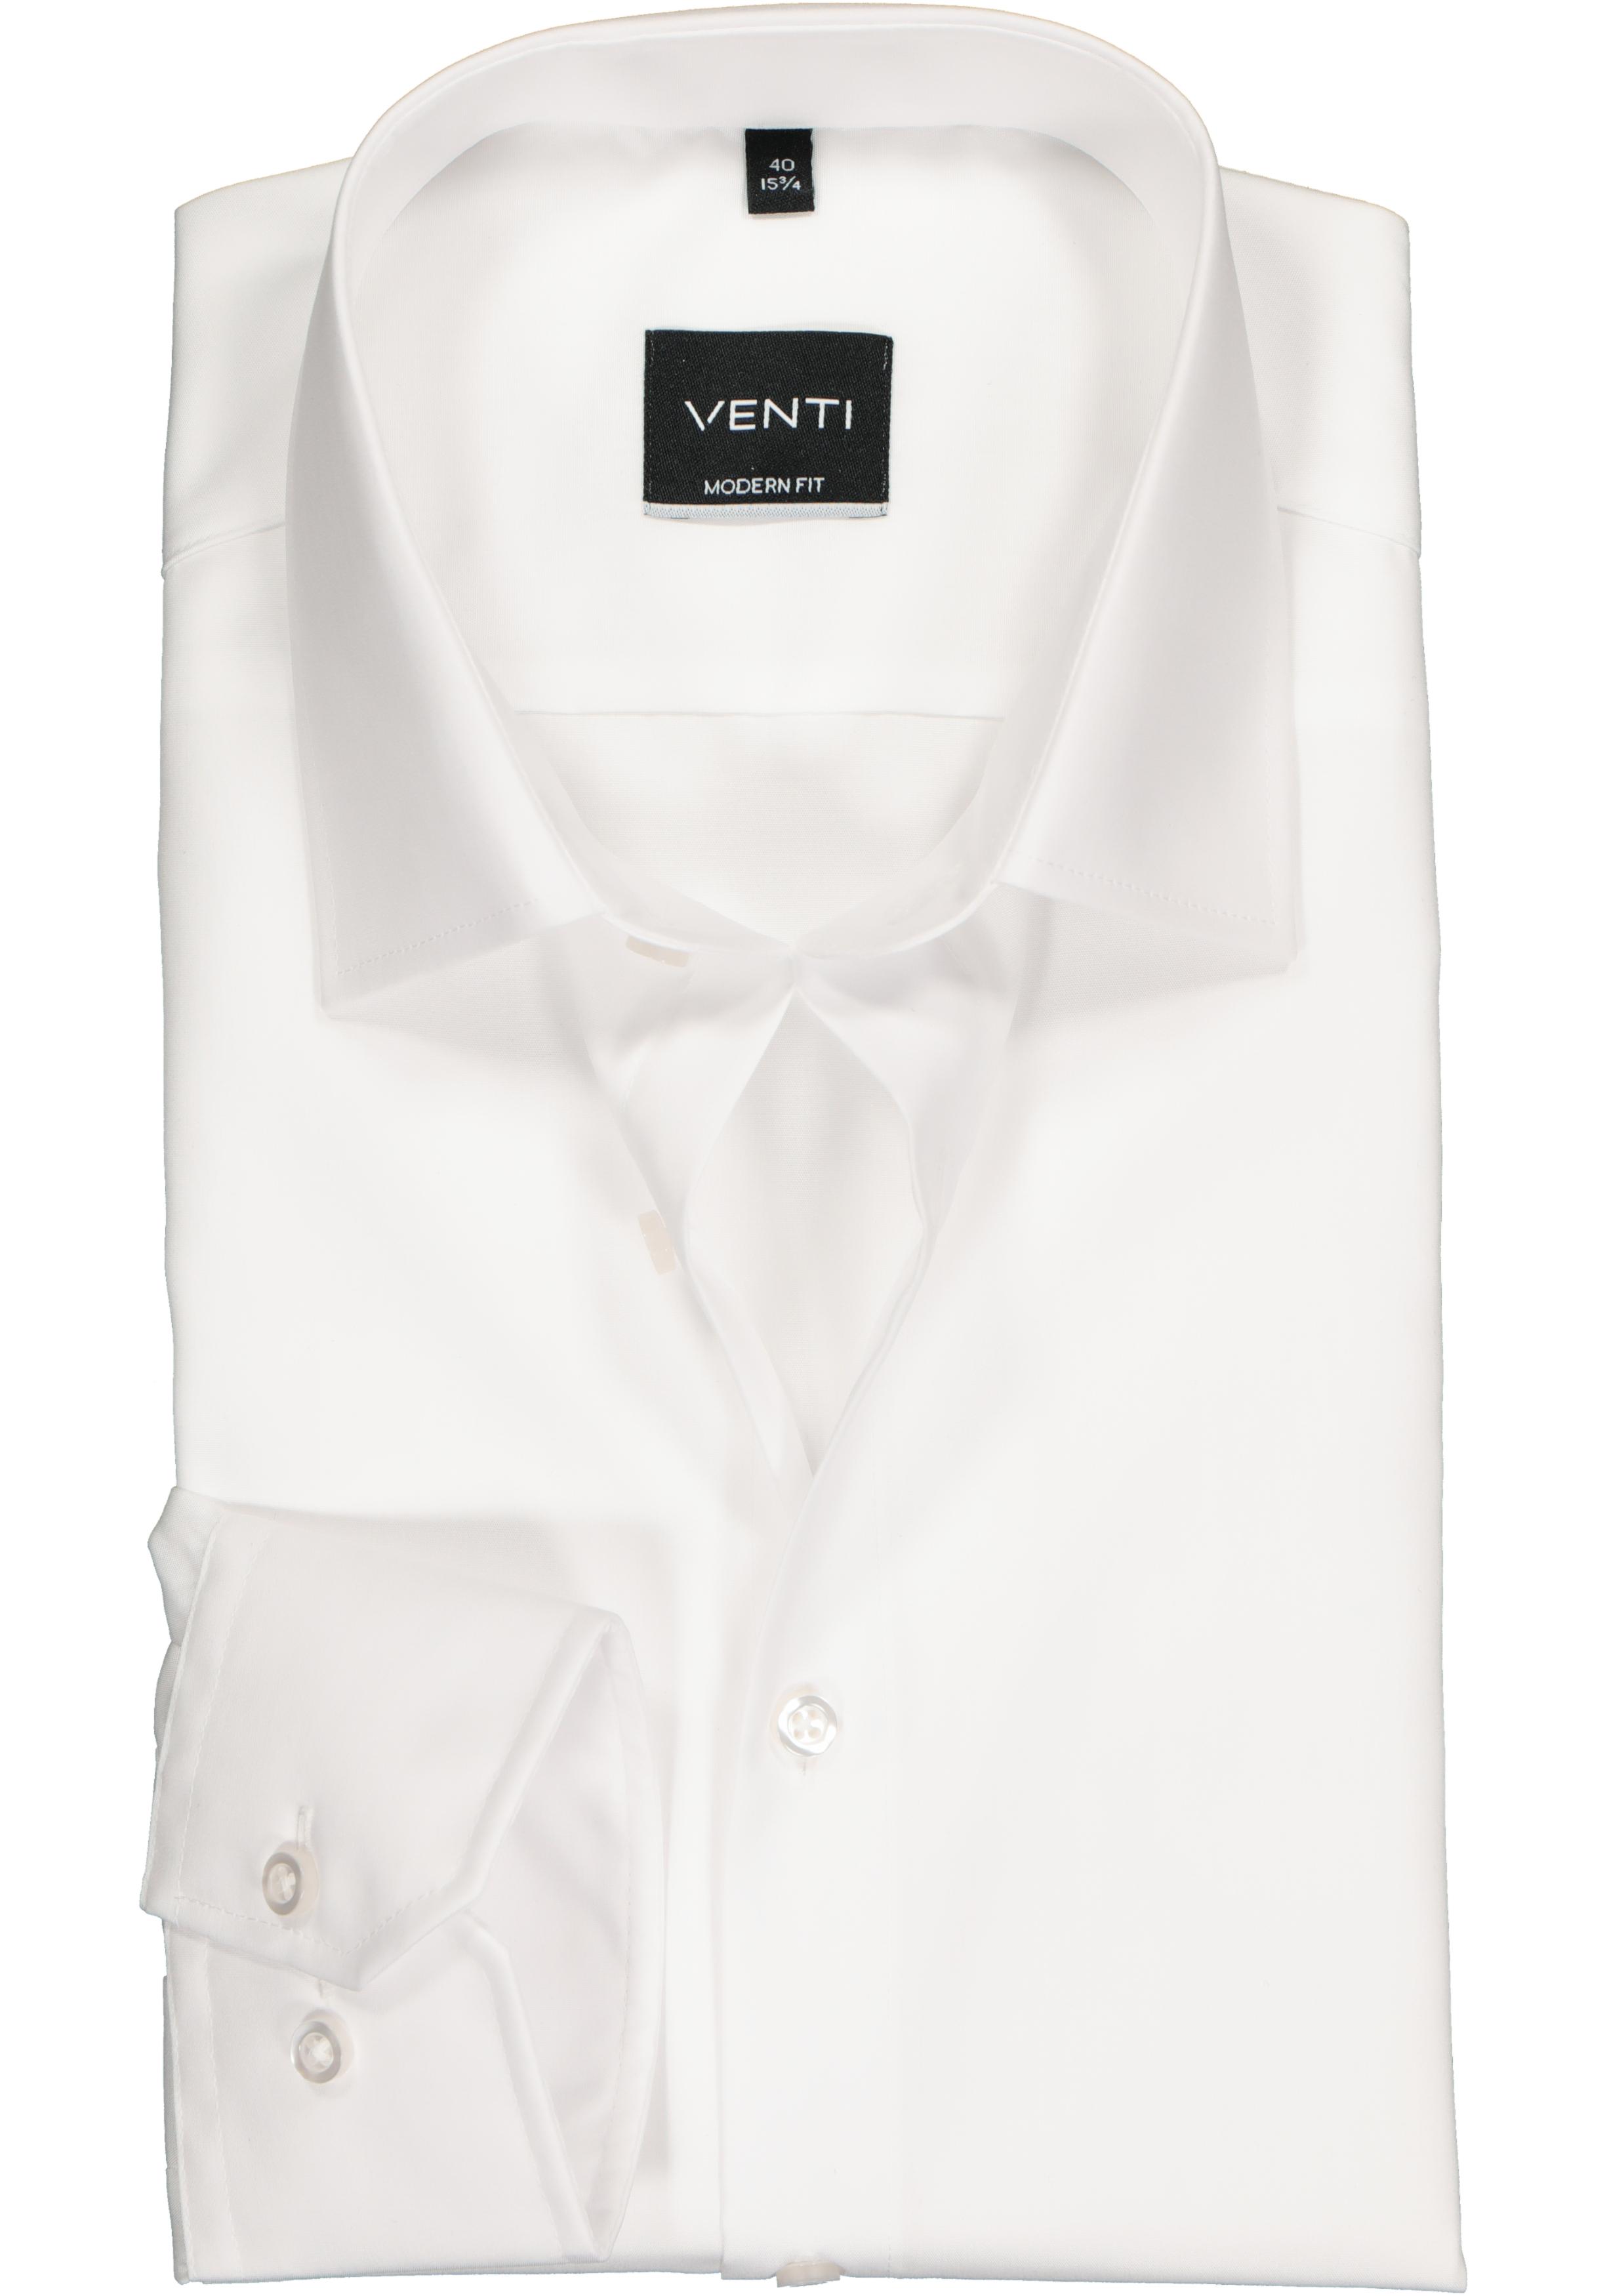 VENTI modern fit overhemd, mouwlengte 7, wit